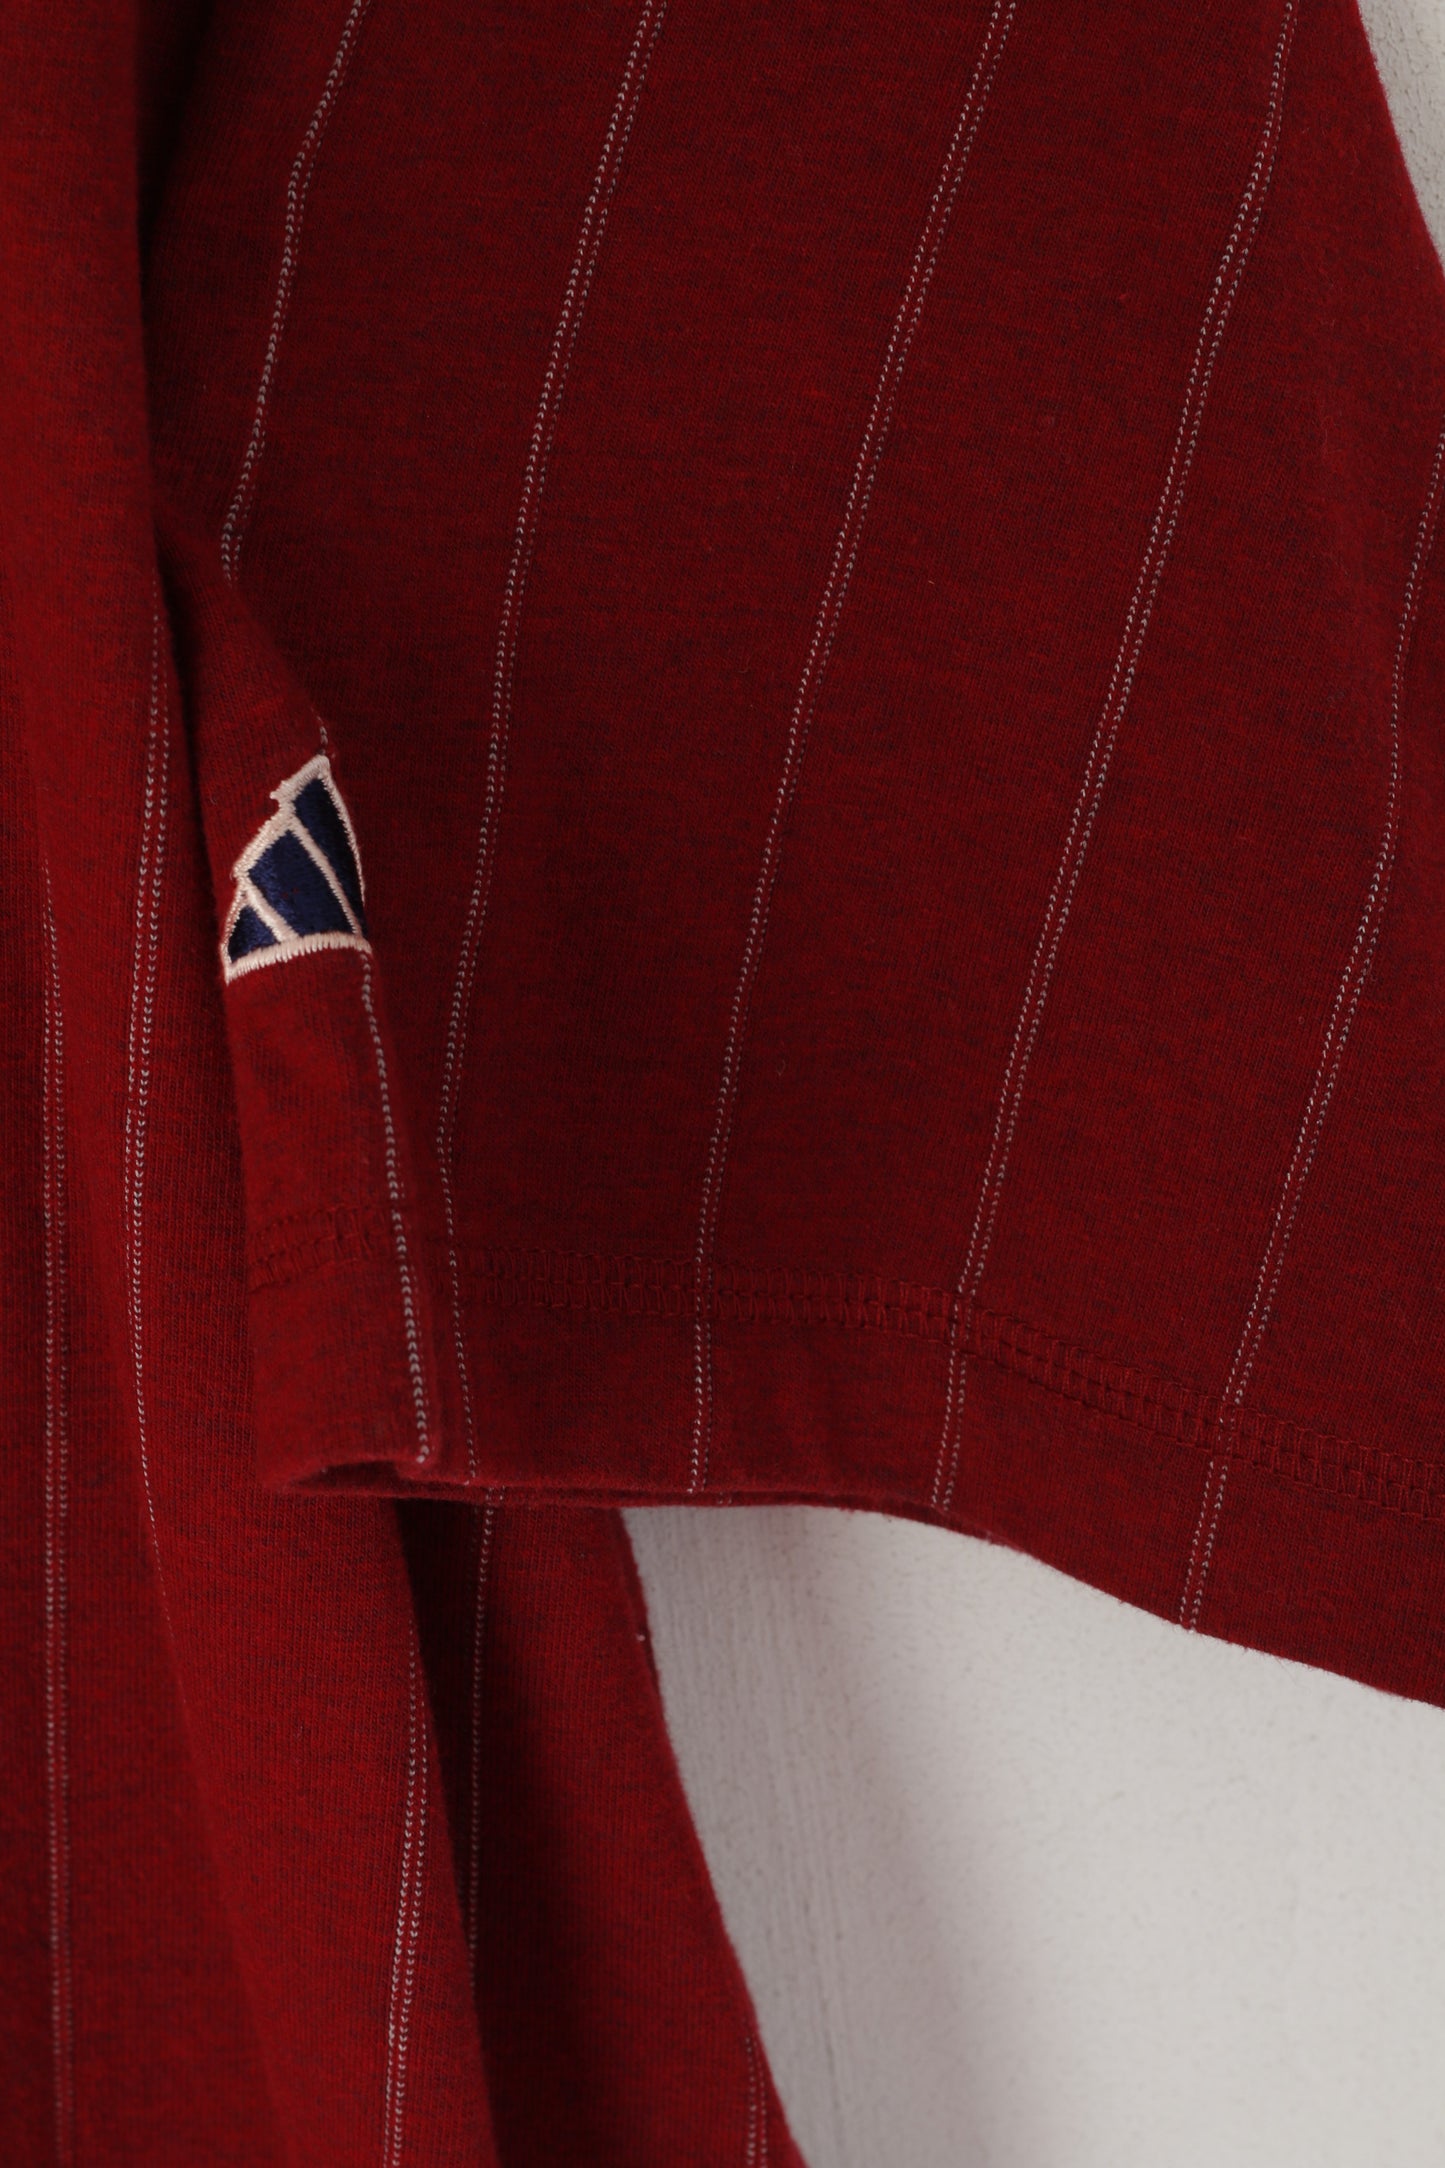 Adidas Men L Polo Shirt Maroon Striped Cotton Vintage Stretch Classic Top